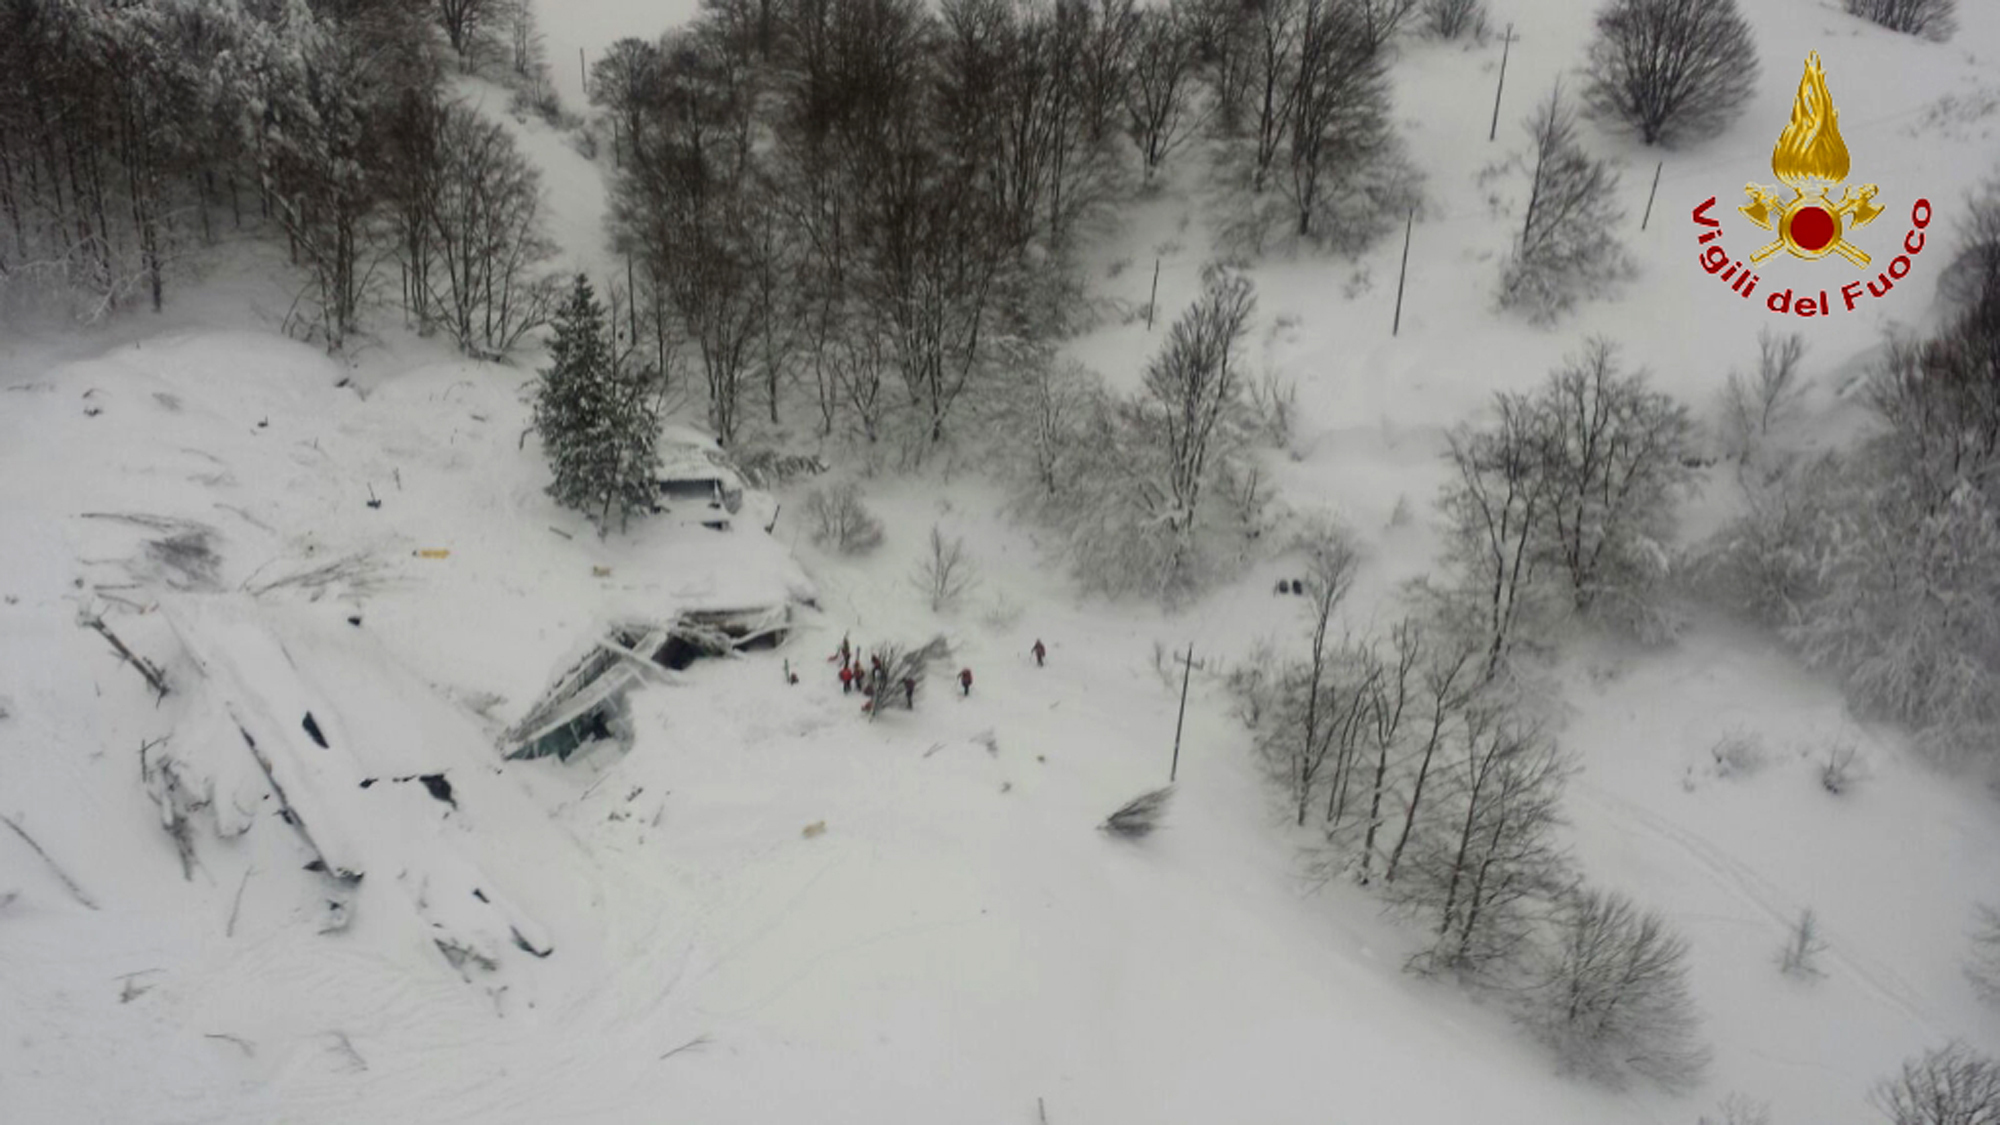 Dozens Missing After Horrific Avalanche Engulfs Italian Hotel